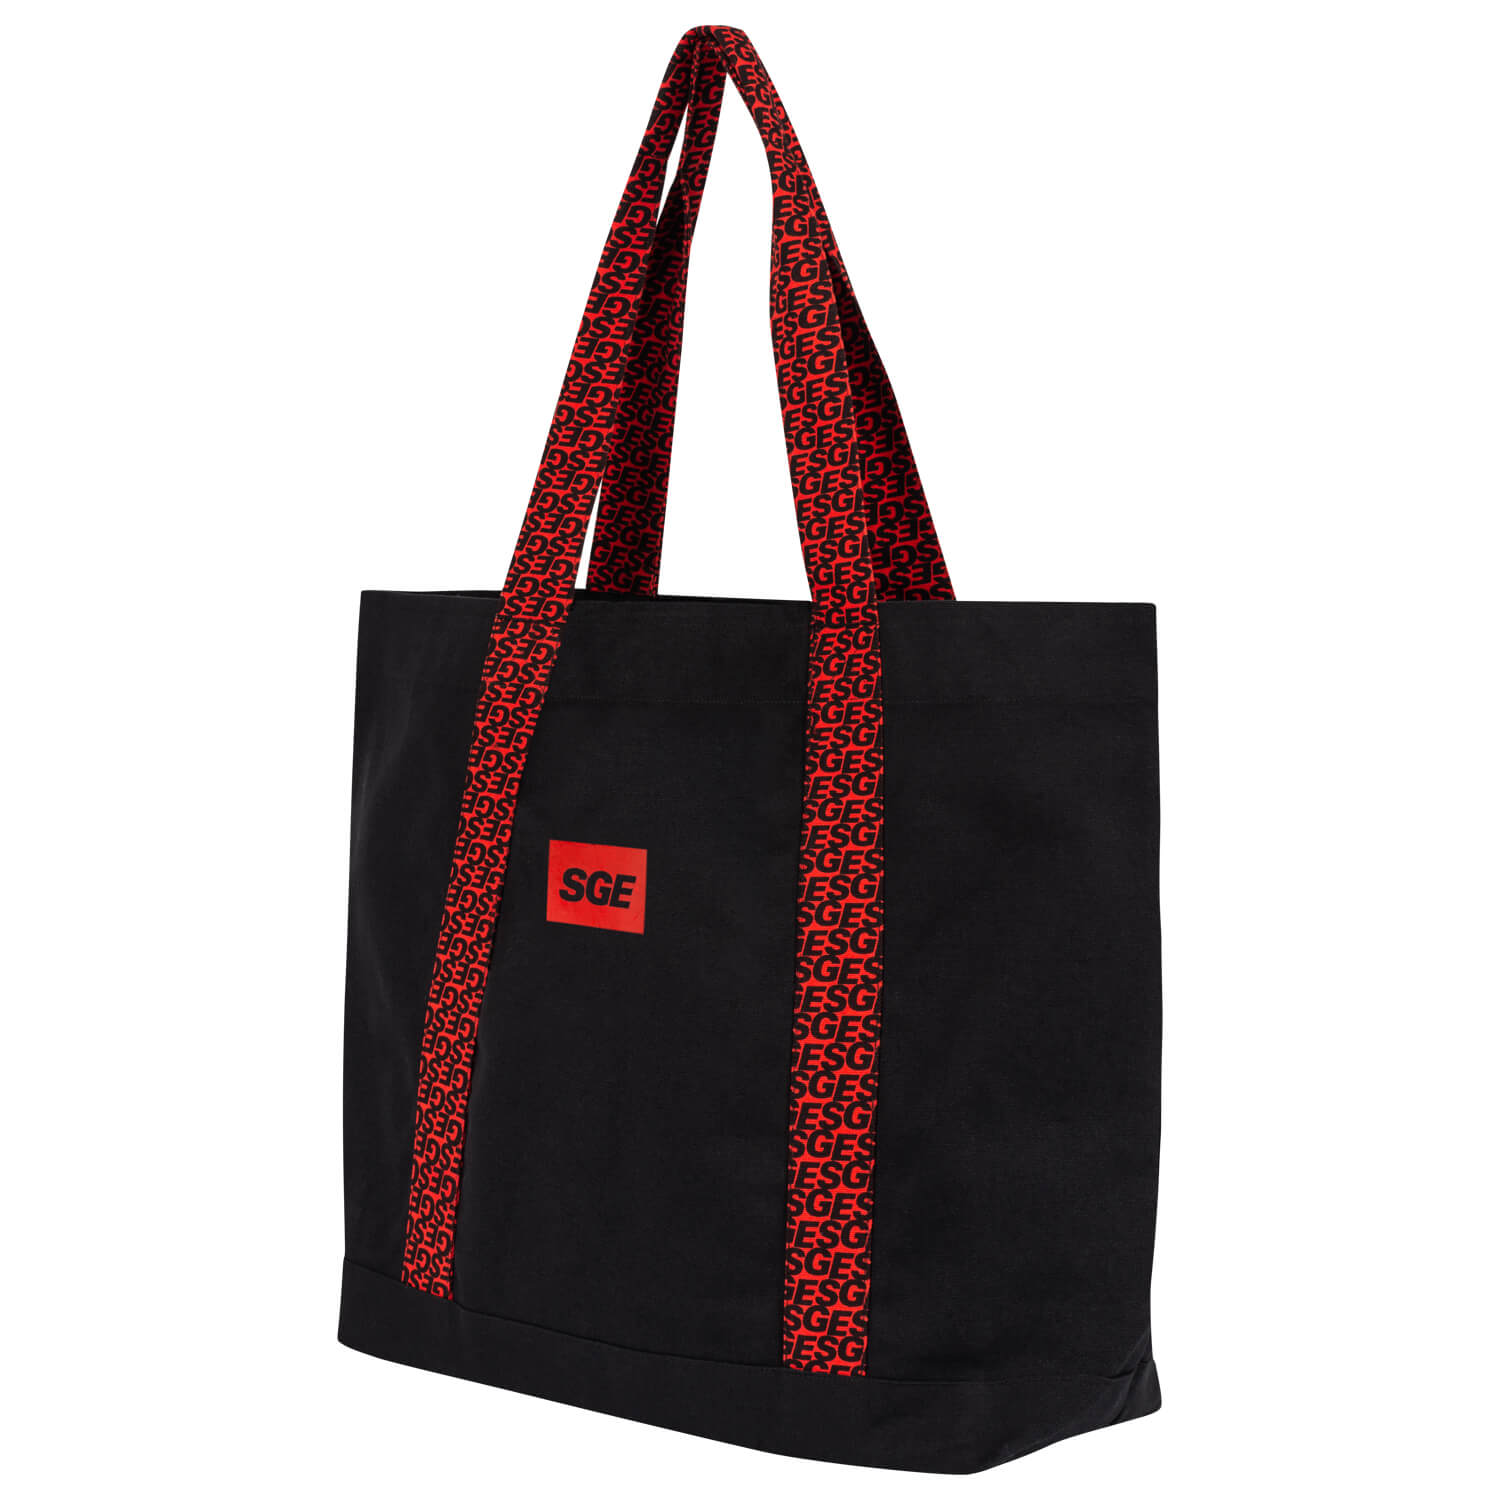 Bild 3: Shopping Bag Red SGE